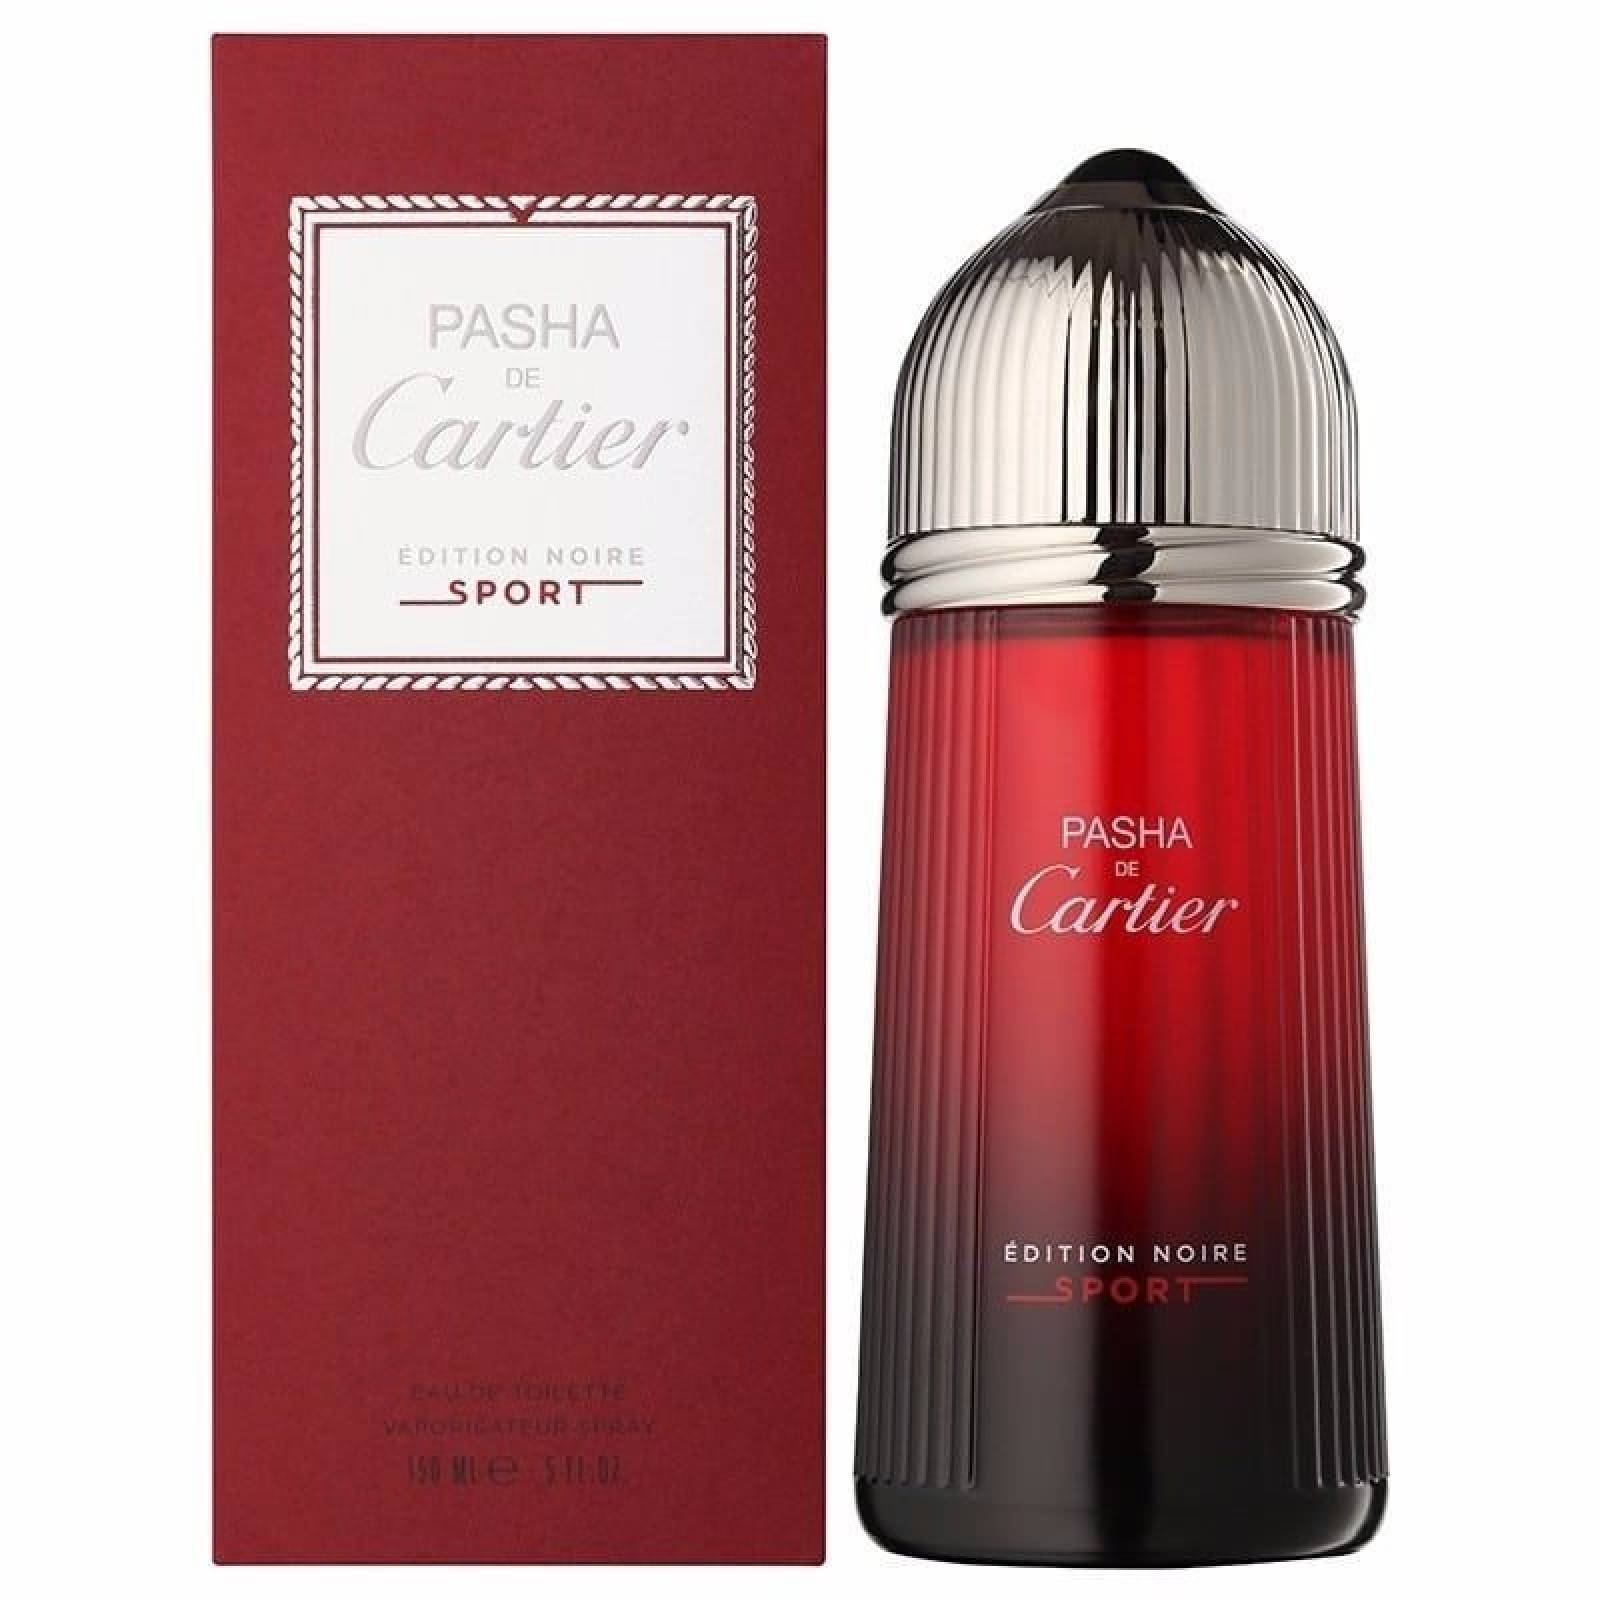 Pasha Edition Noire Sport 150 ml Edt Spray de Cartier para Caballero